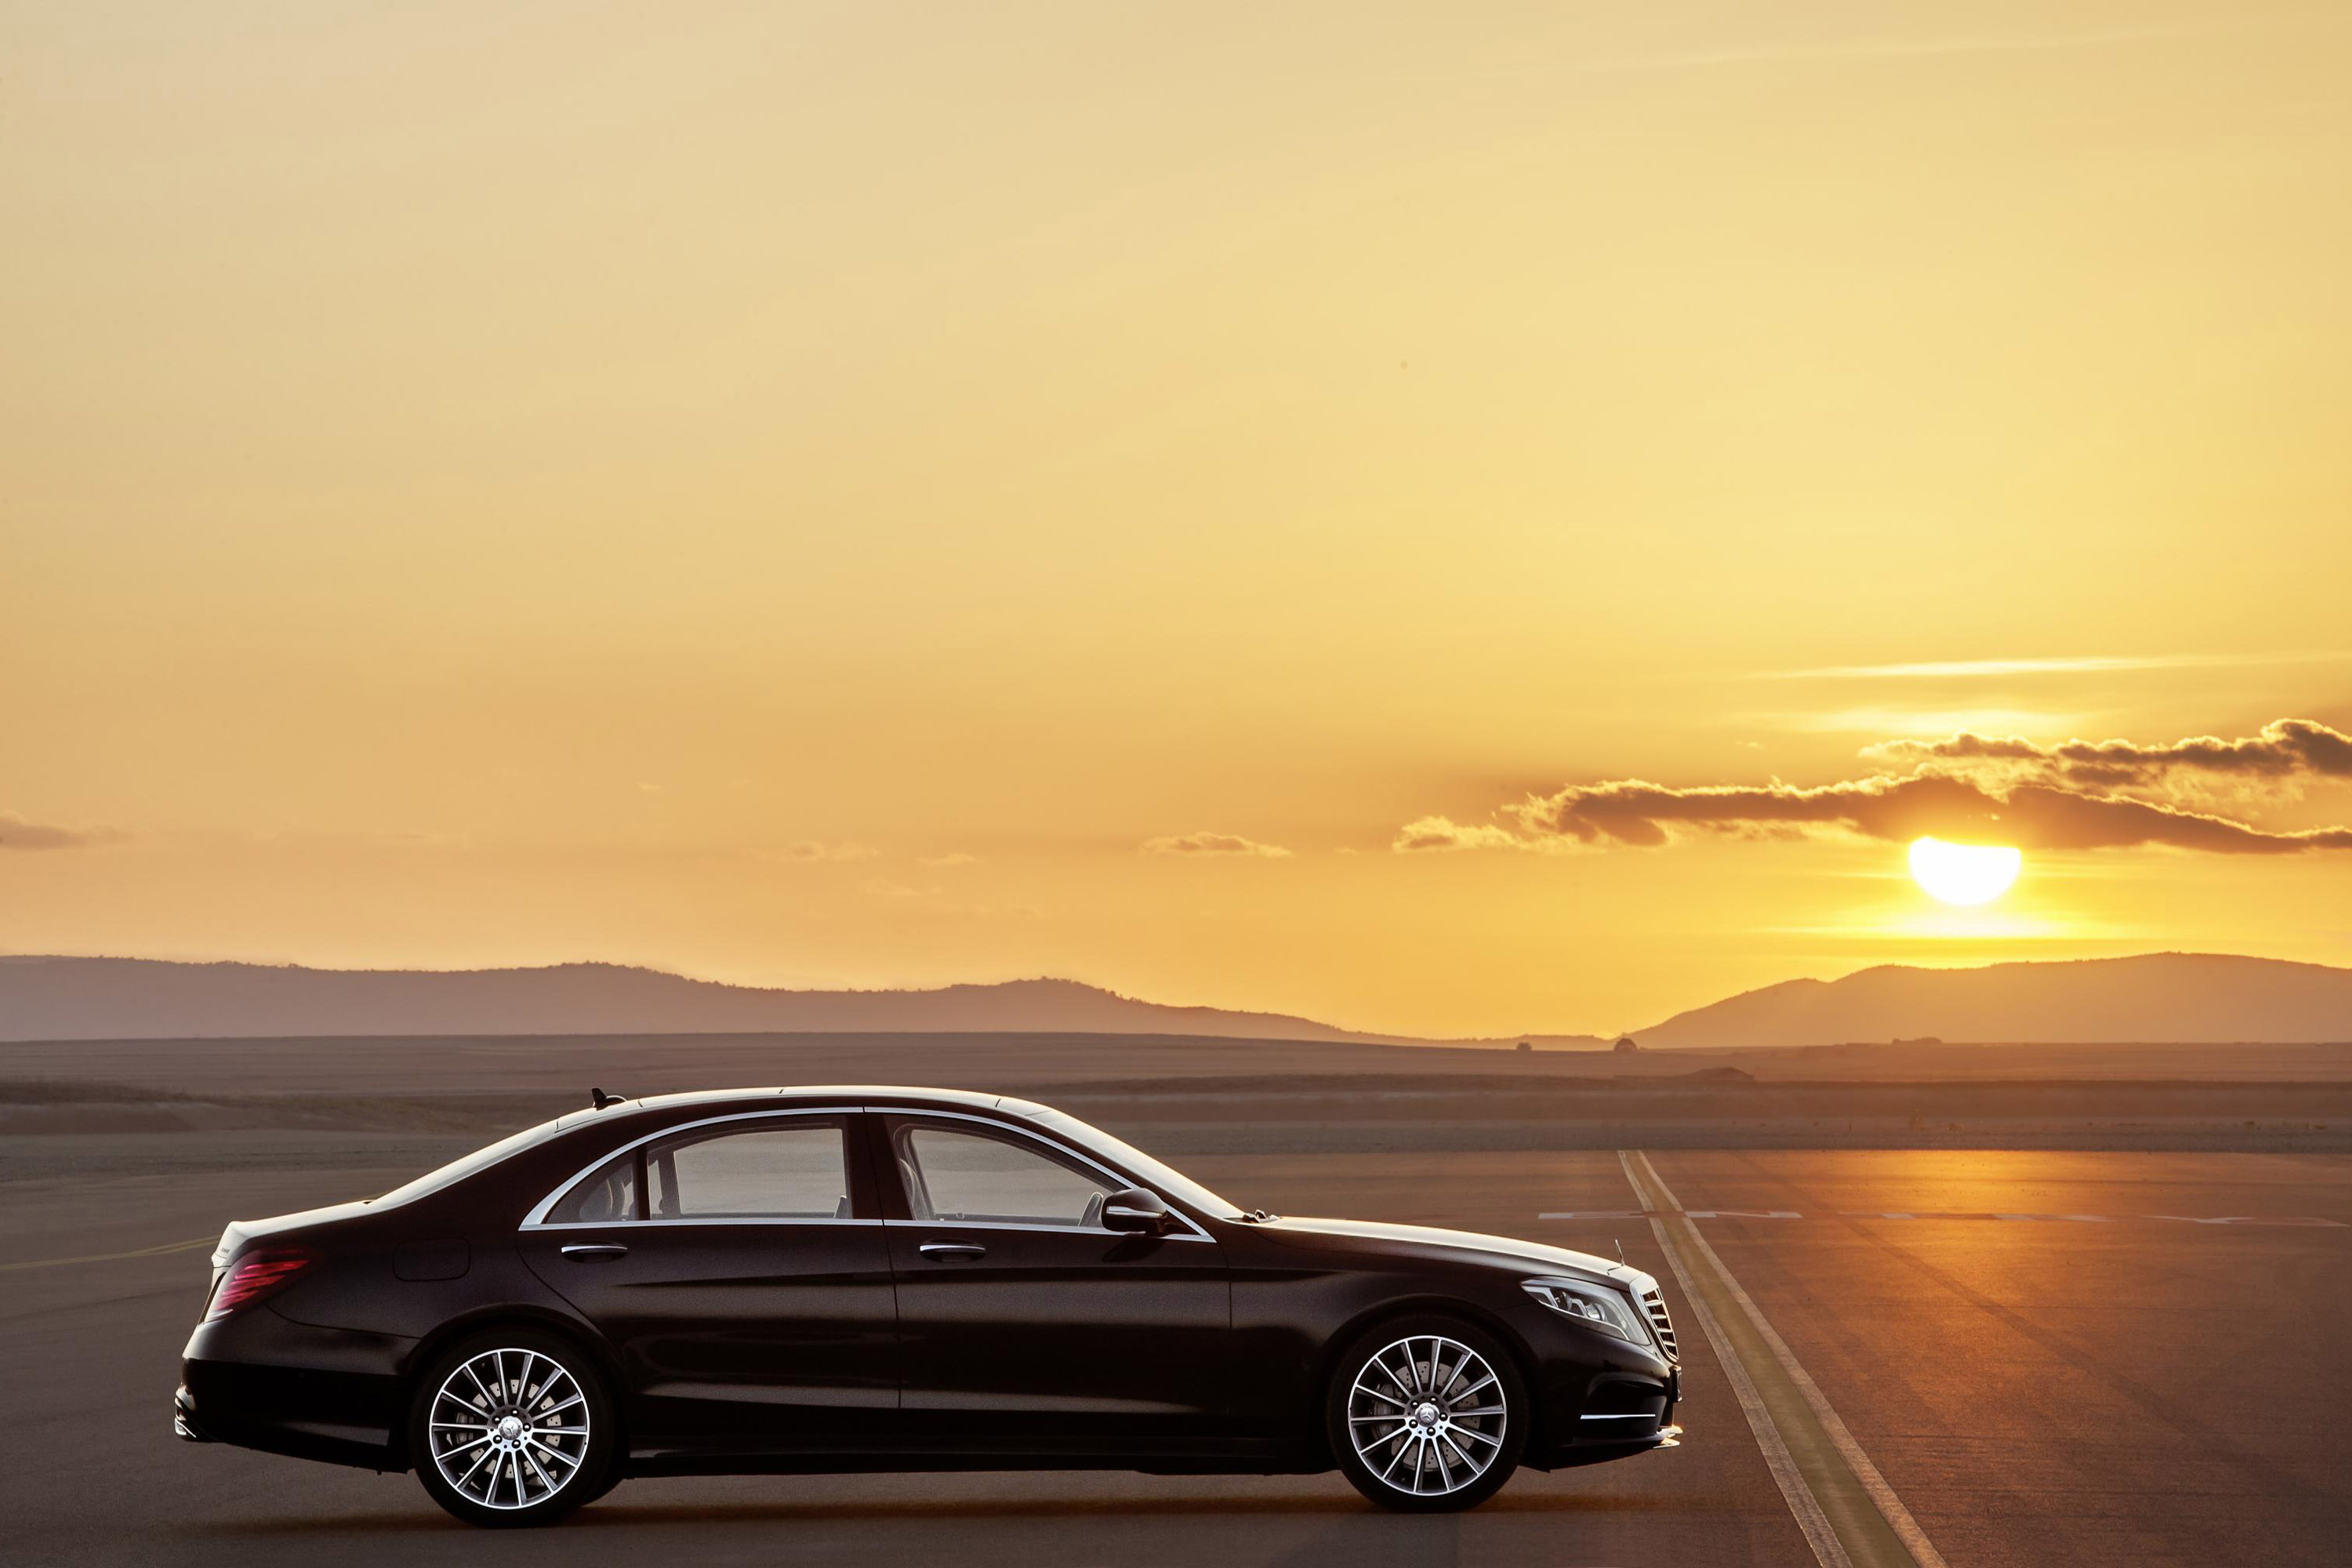 Mercedes-Benz S-Class, Luxury car, HD picture, 2014 model, 3000x2000 HD Desktop